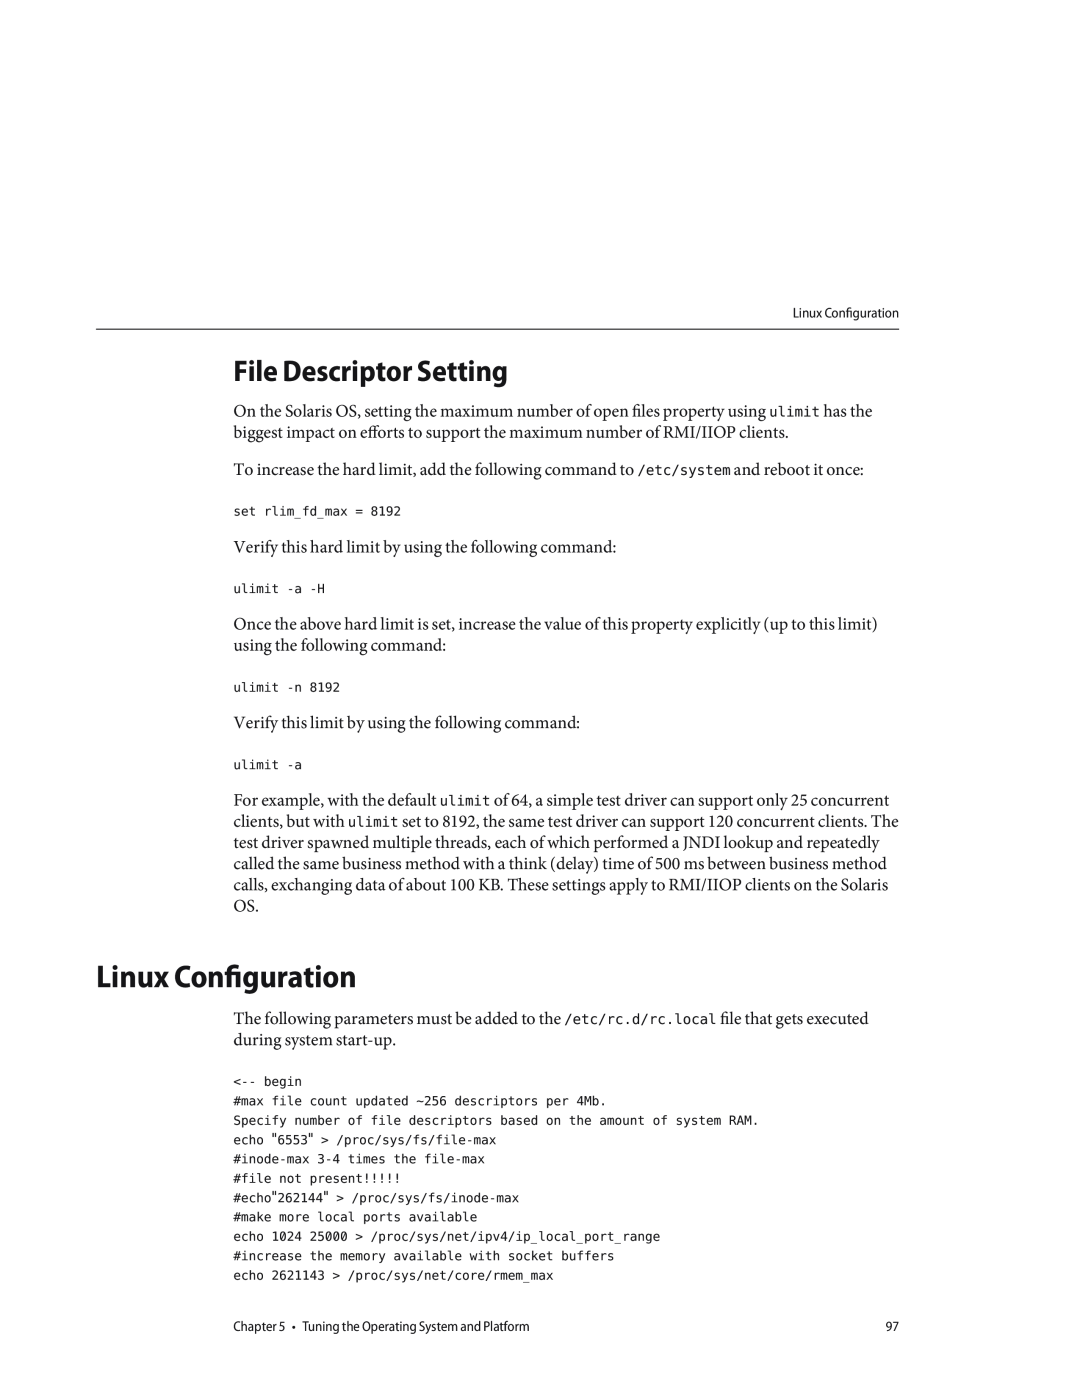 Sun Microsystems 820434310 manual Linux Configuration, File Descriptor Setting 